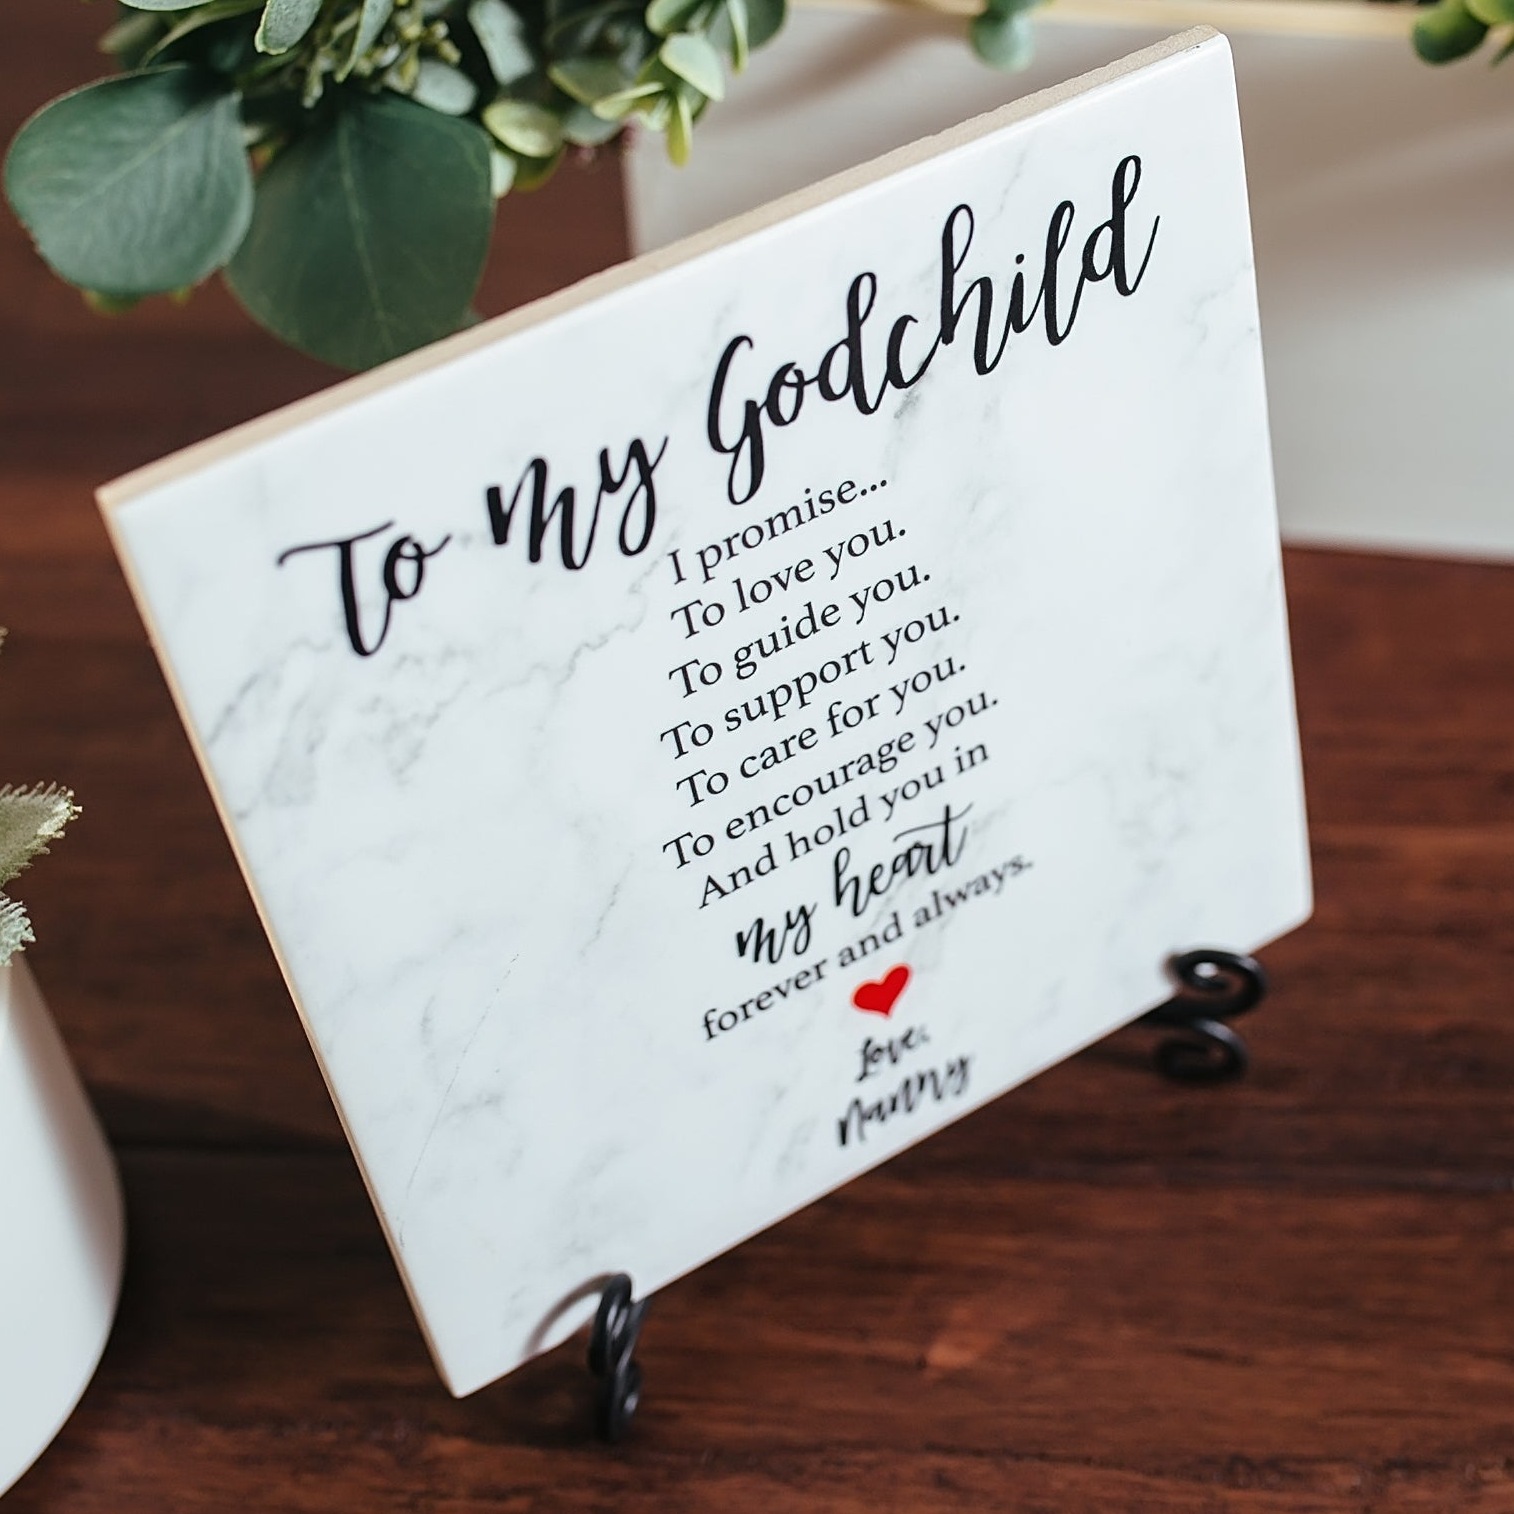 Godchild Sign Gift From Godmother/Godfather to Godson/Goddaughter